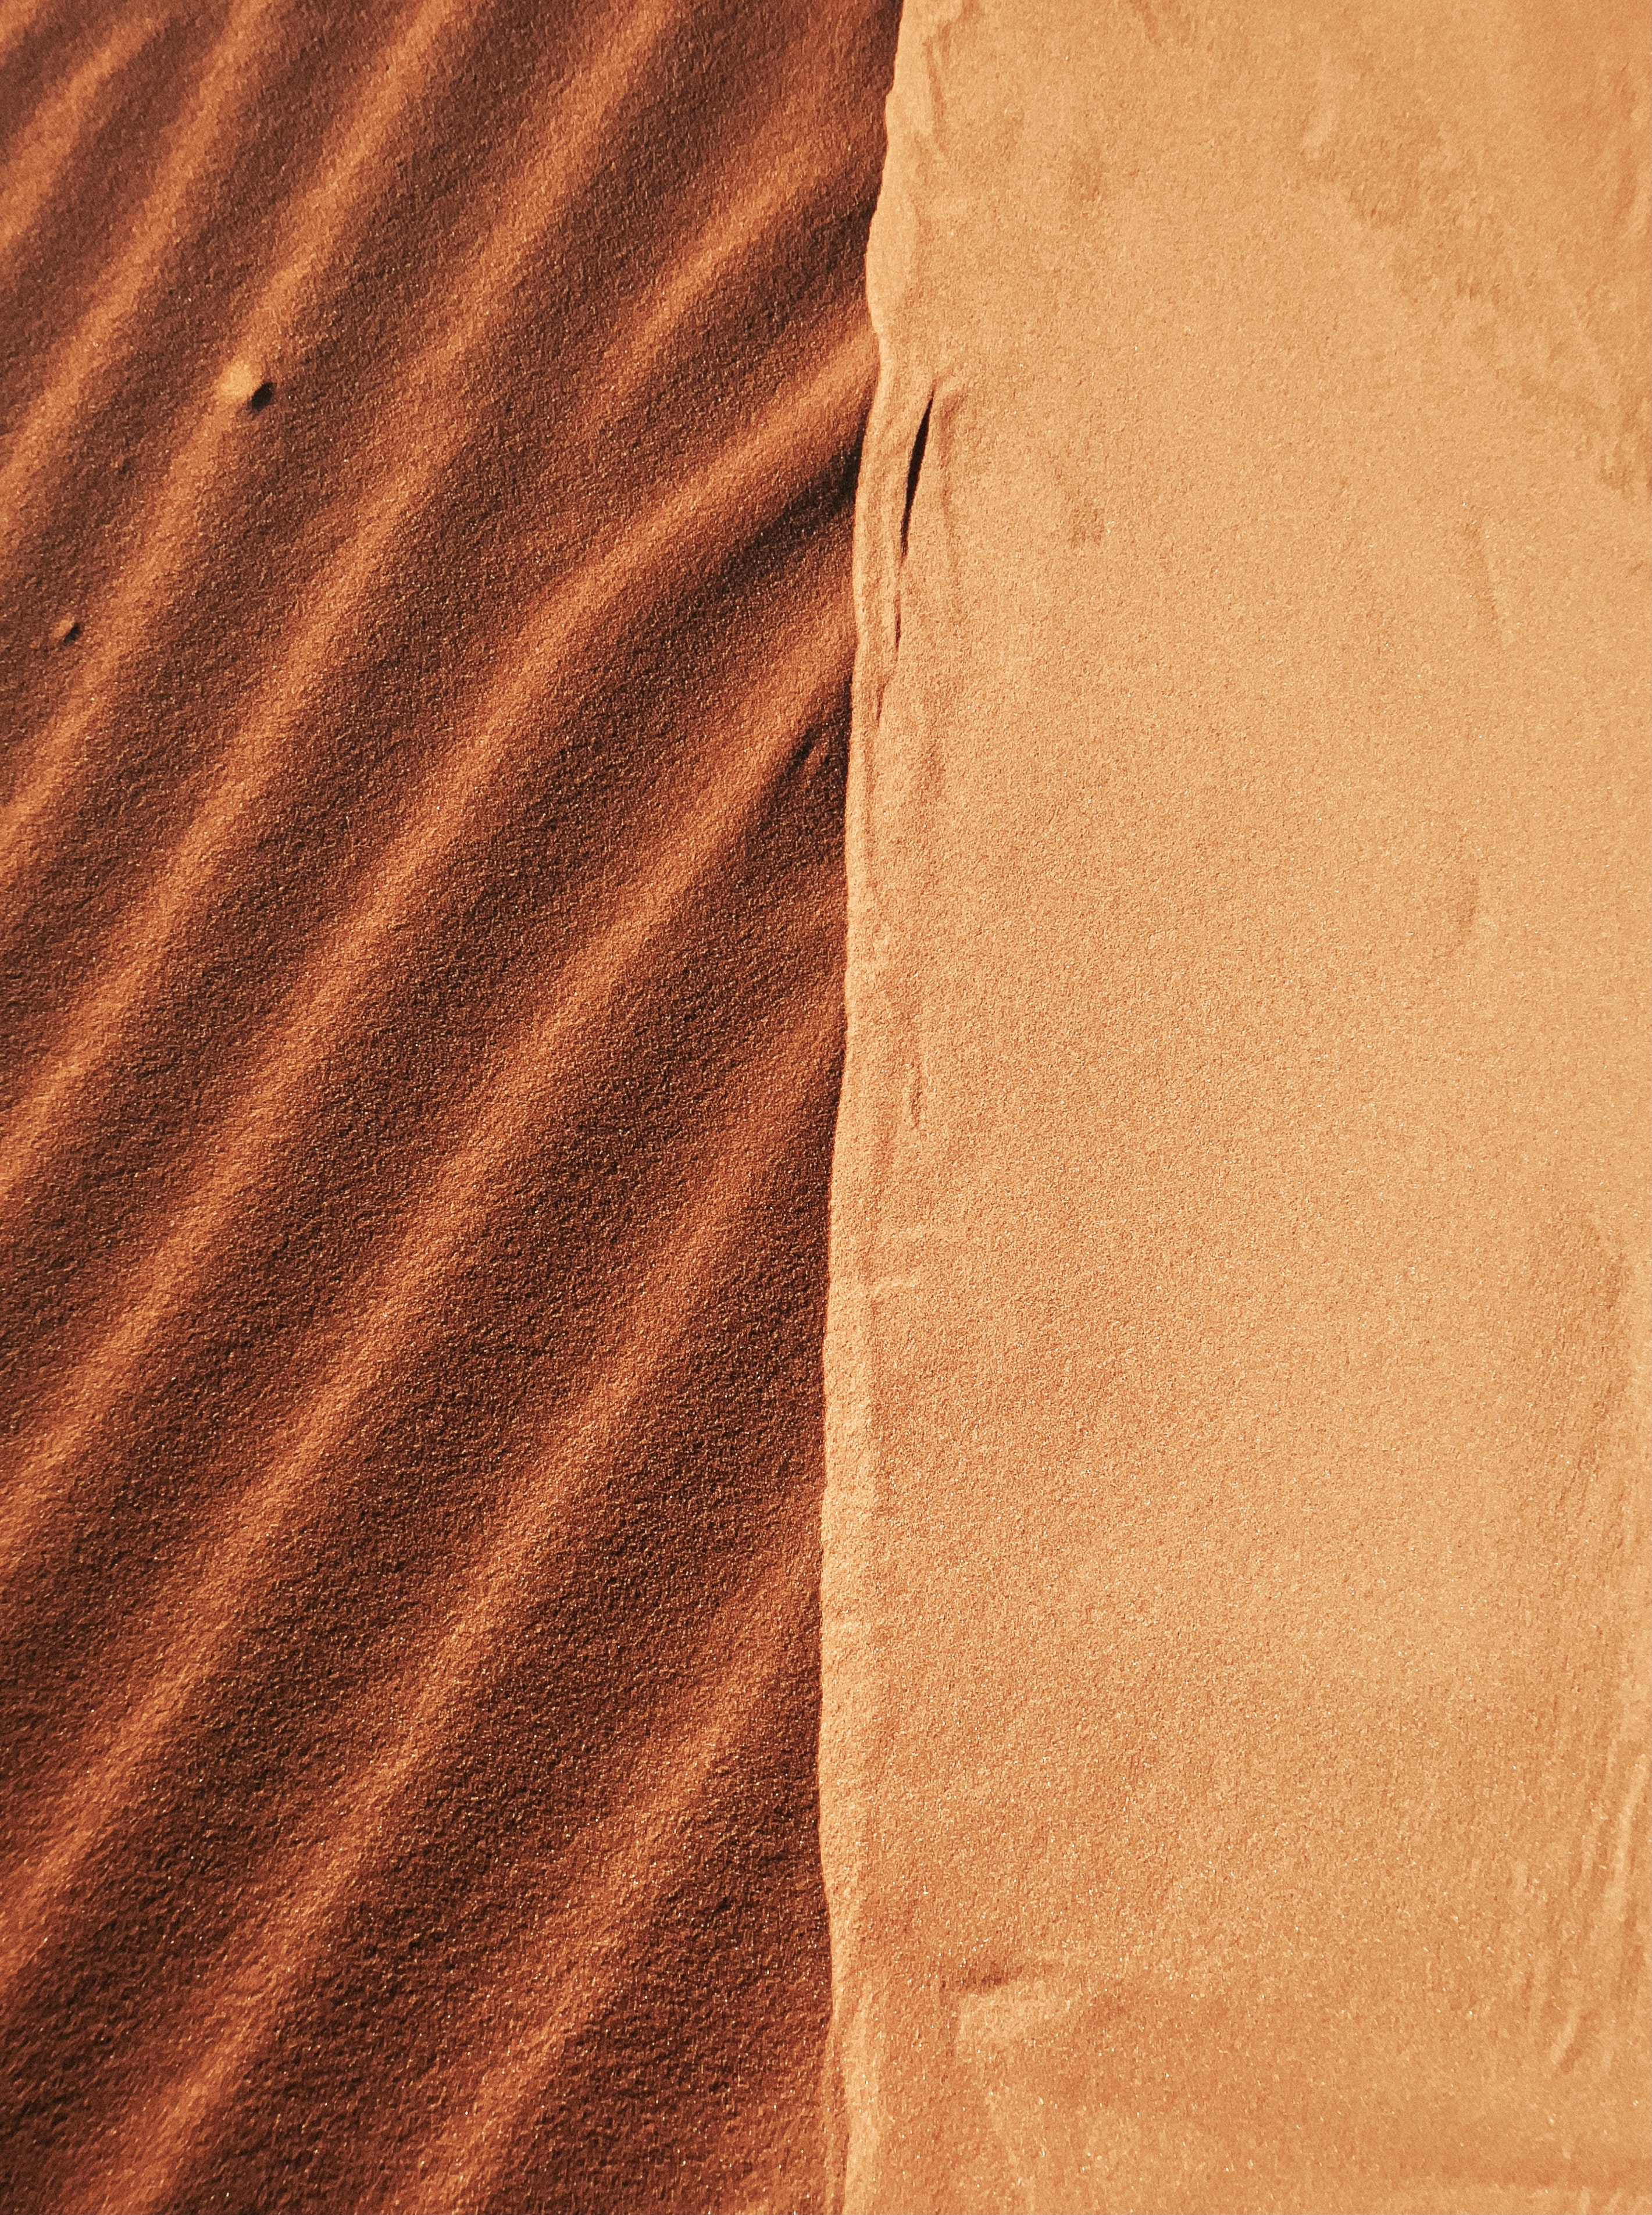 Desktop Backgrounds Relief textures, brown, sand, shades